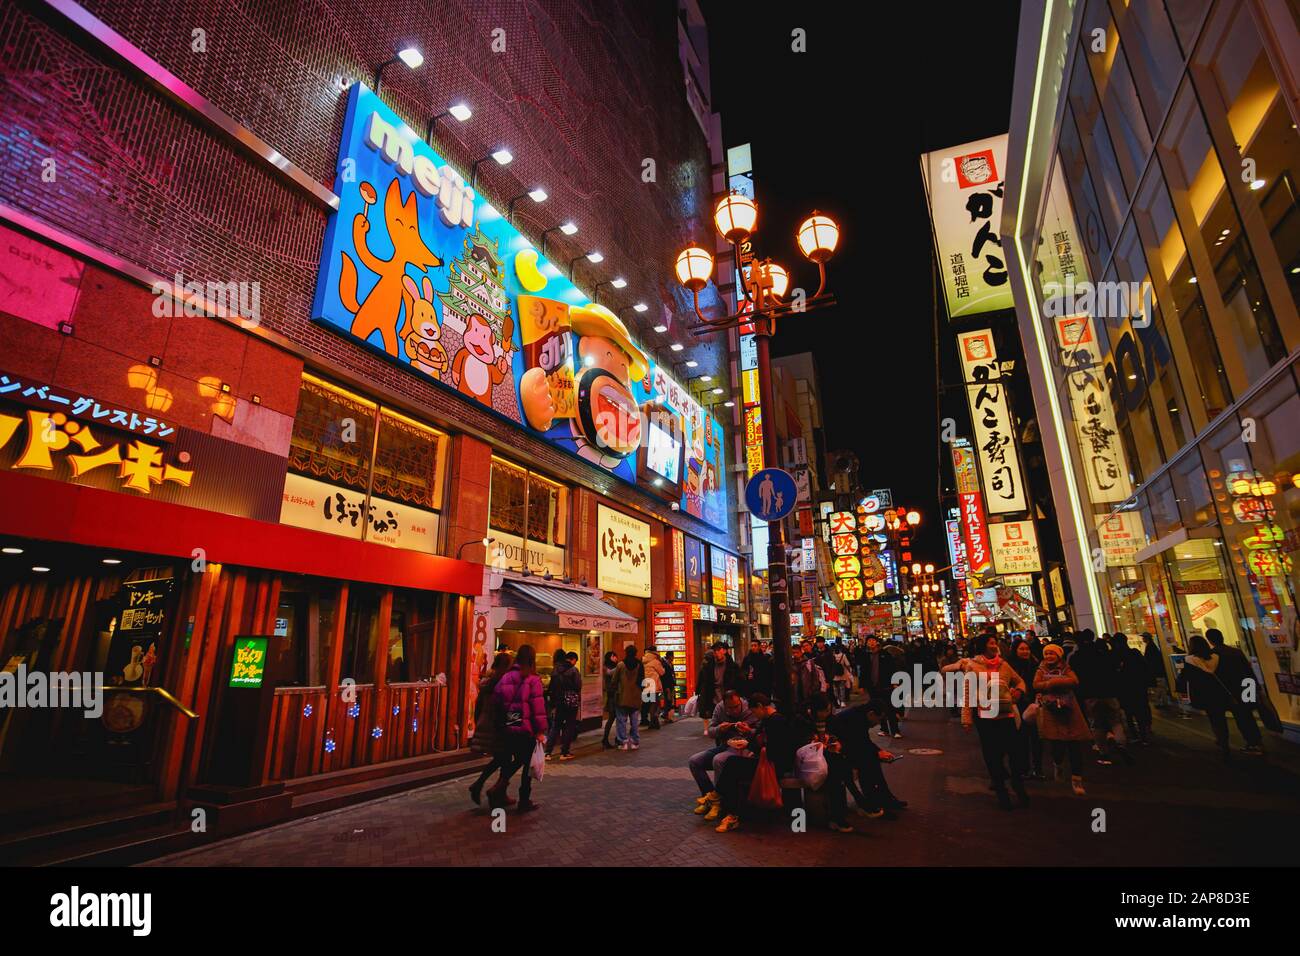 Osaka, Japan - 16. Dezember 2019: Namba-Shinsaibashi-Dotonbori Einkaufsstraße, das berühmte Viertel zum Einkaufen und Essen in Osaka, Japan. Stockfoto